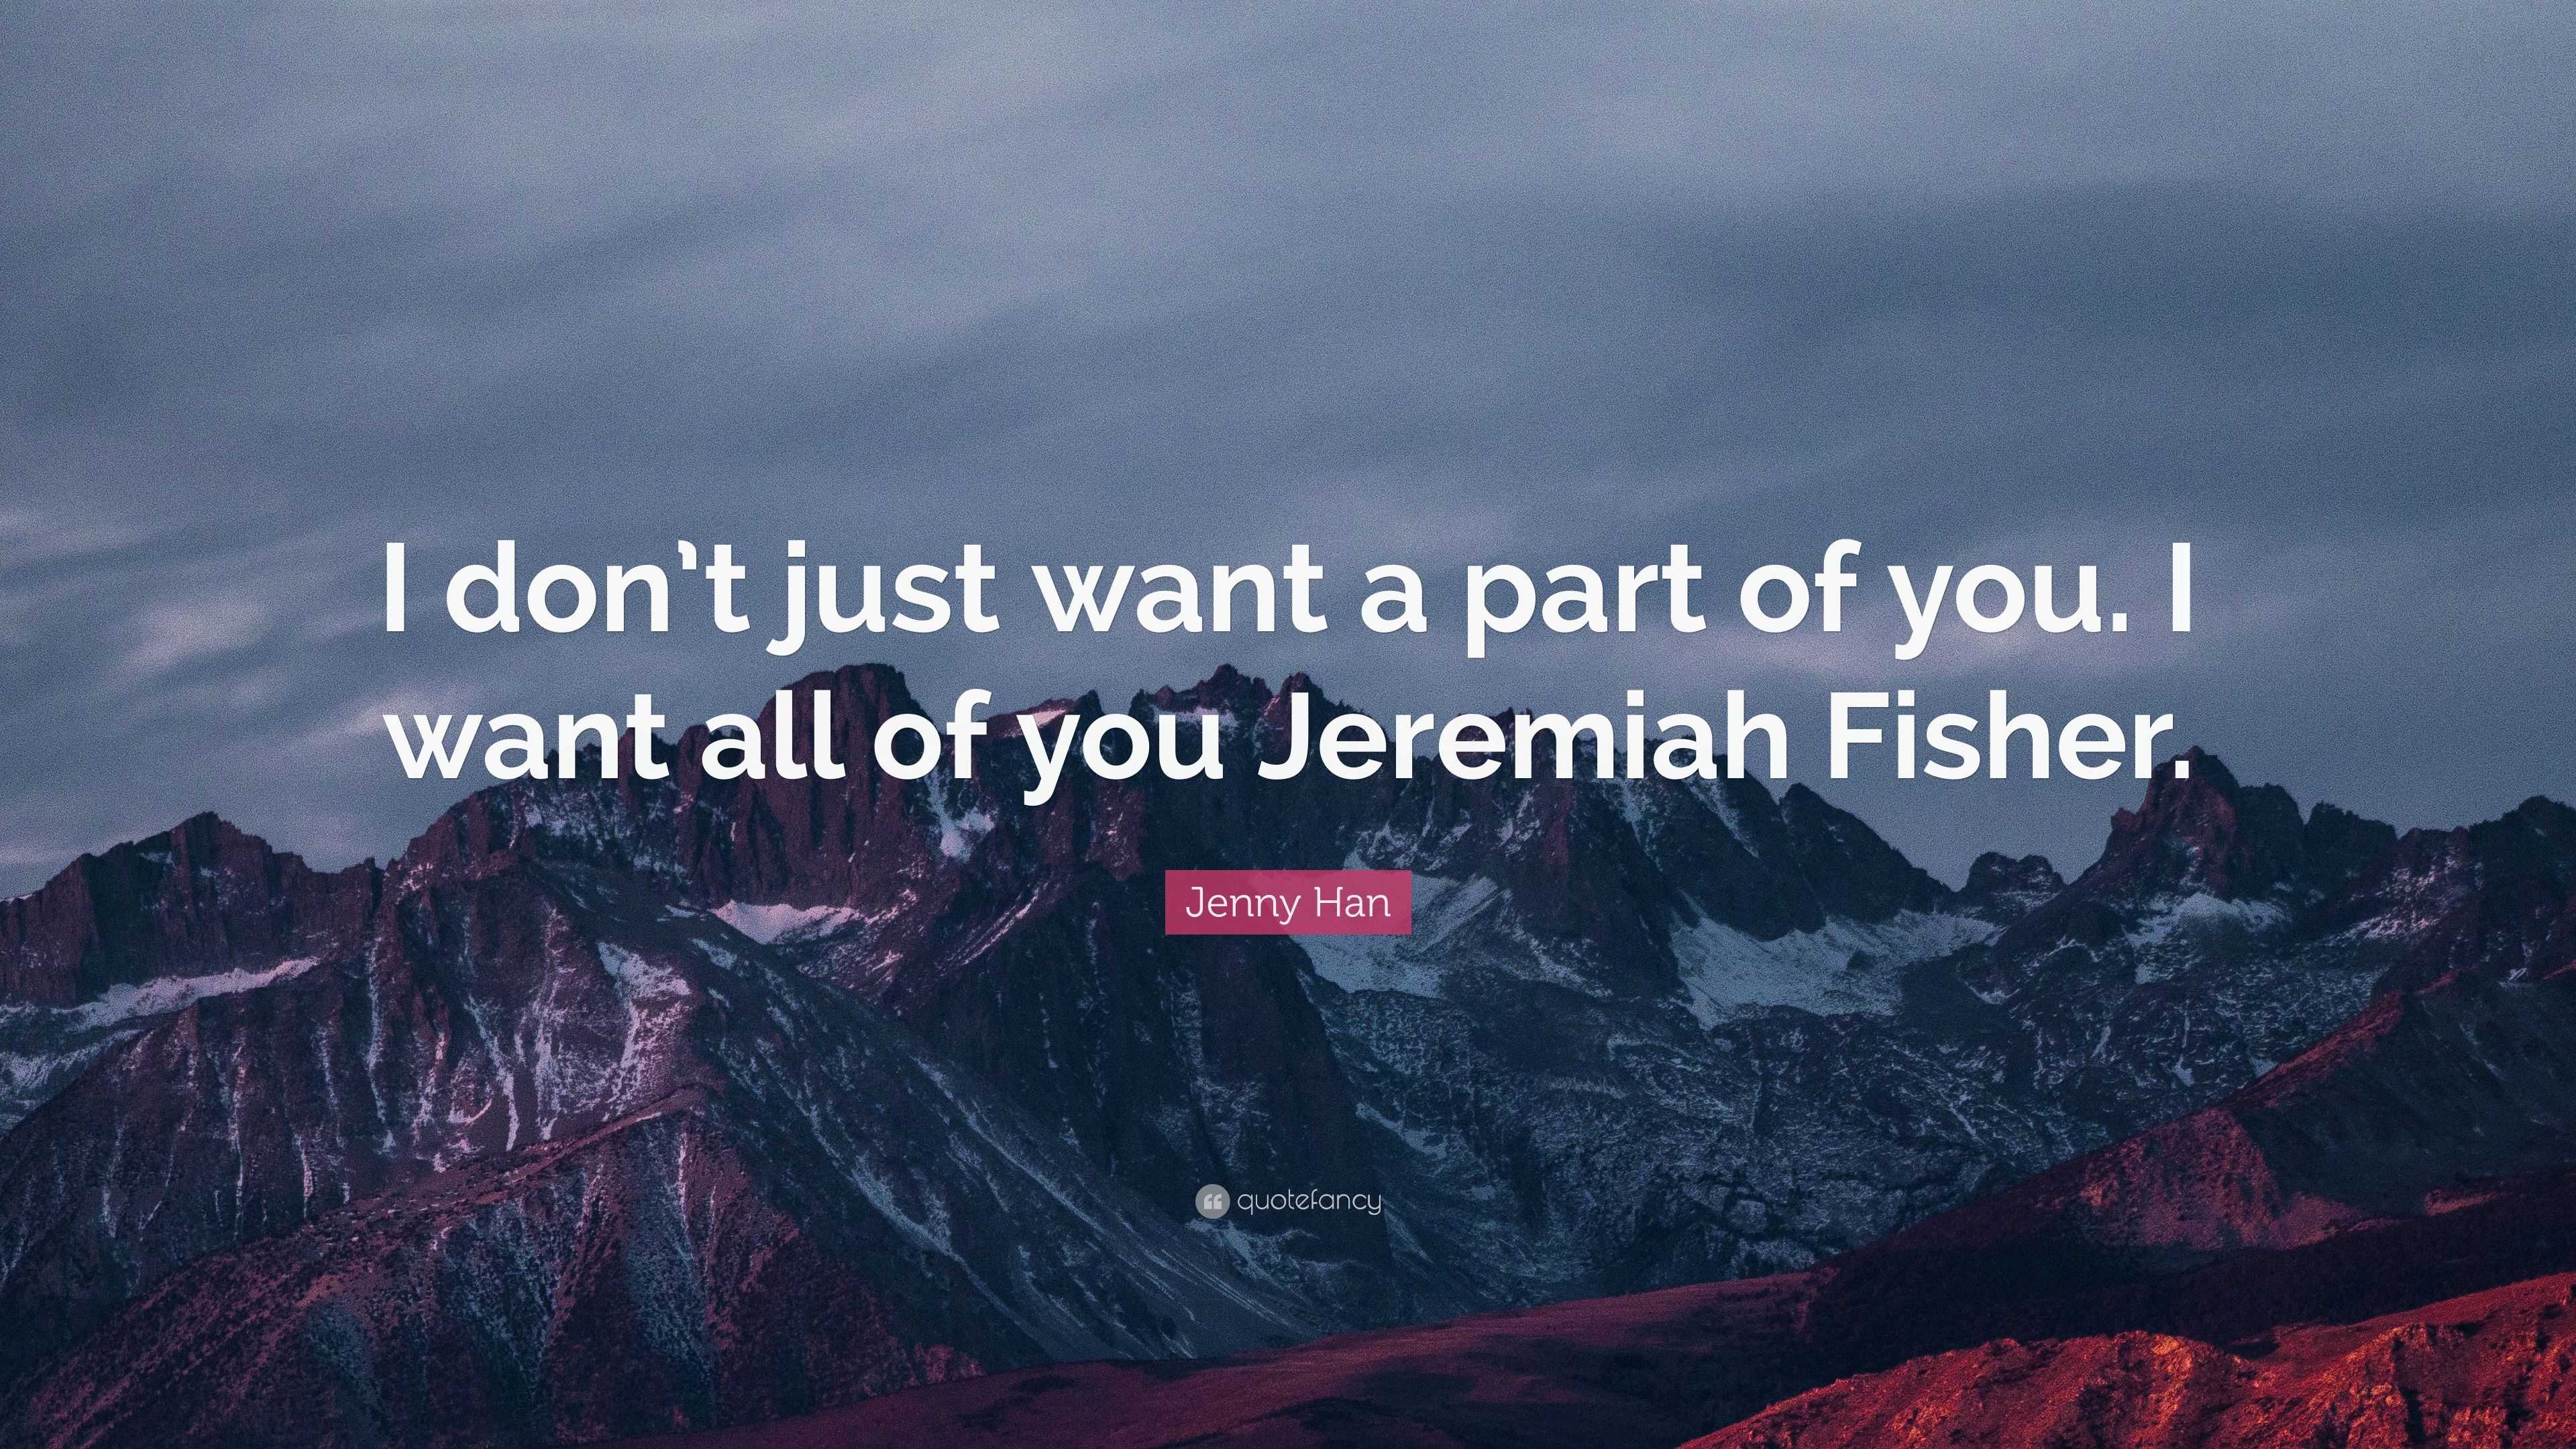 51 Jeremiah fisherGavin ideas  jeremiah hottest guy ever fisher